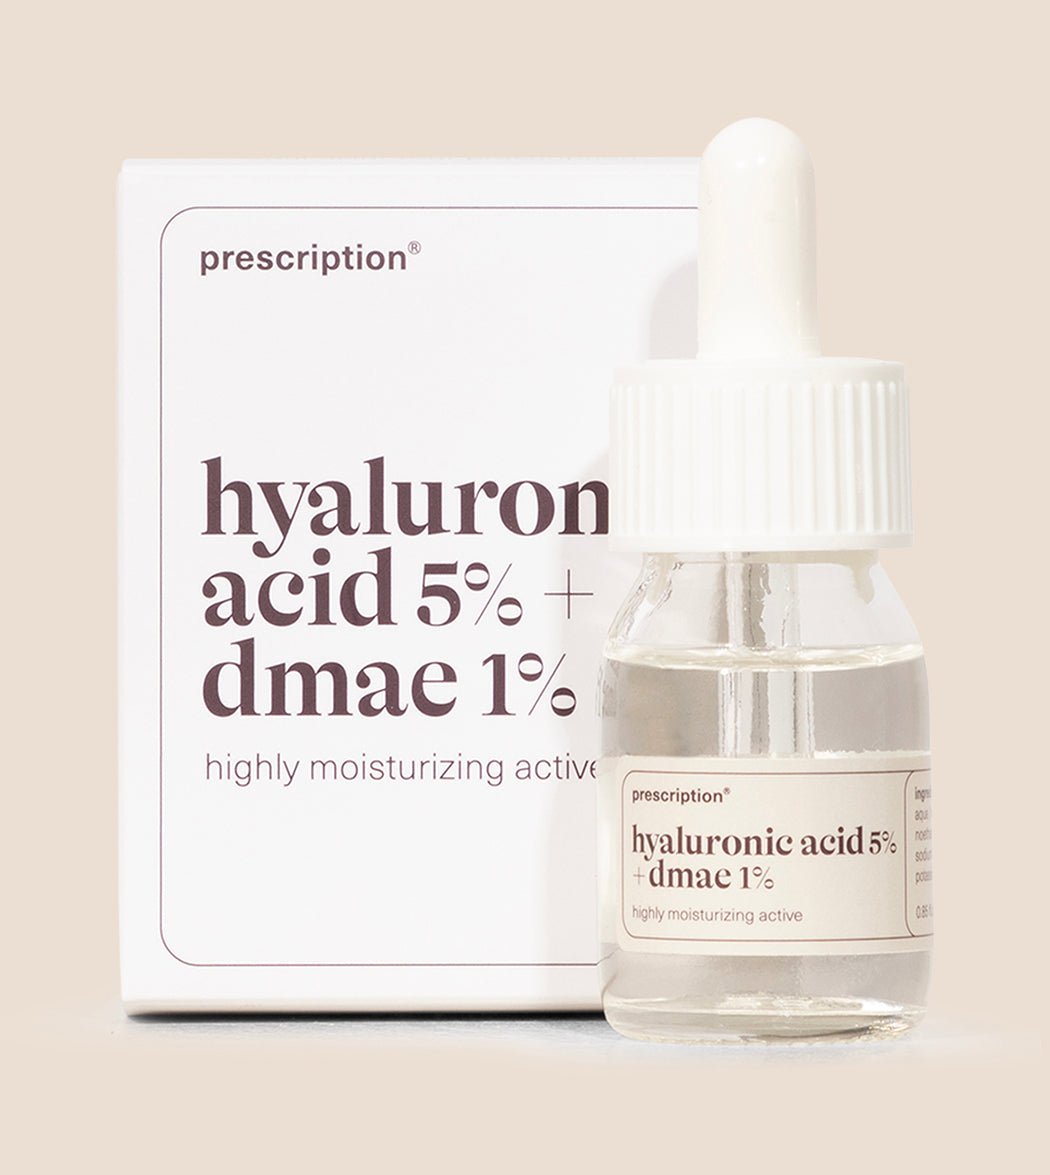 Hyaluronsäure 5% + DMAE 1%